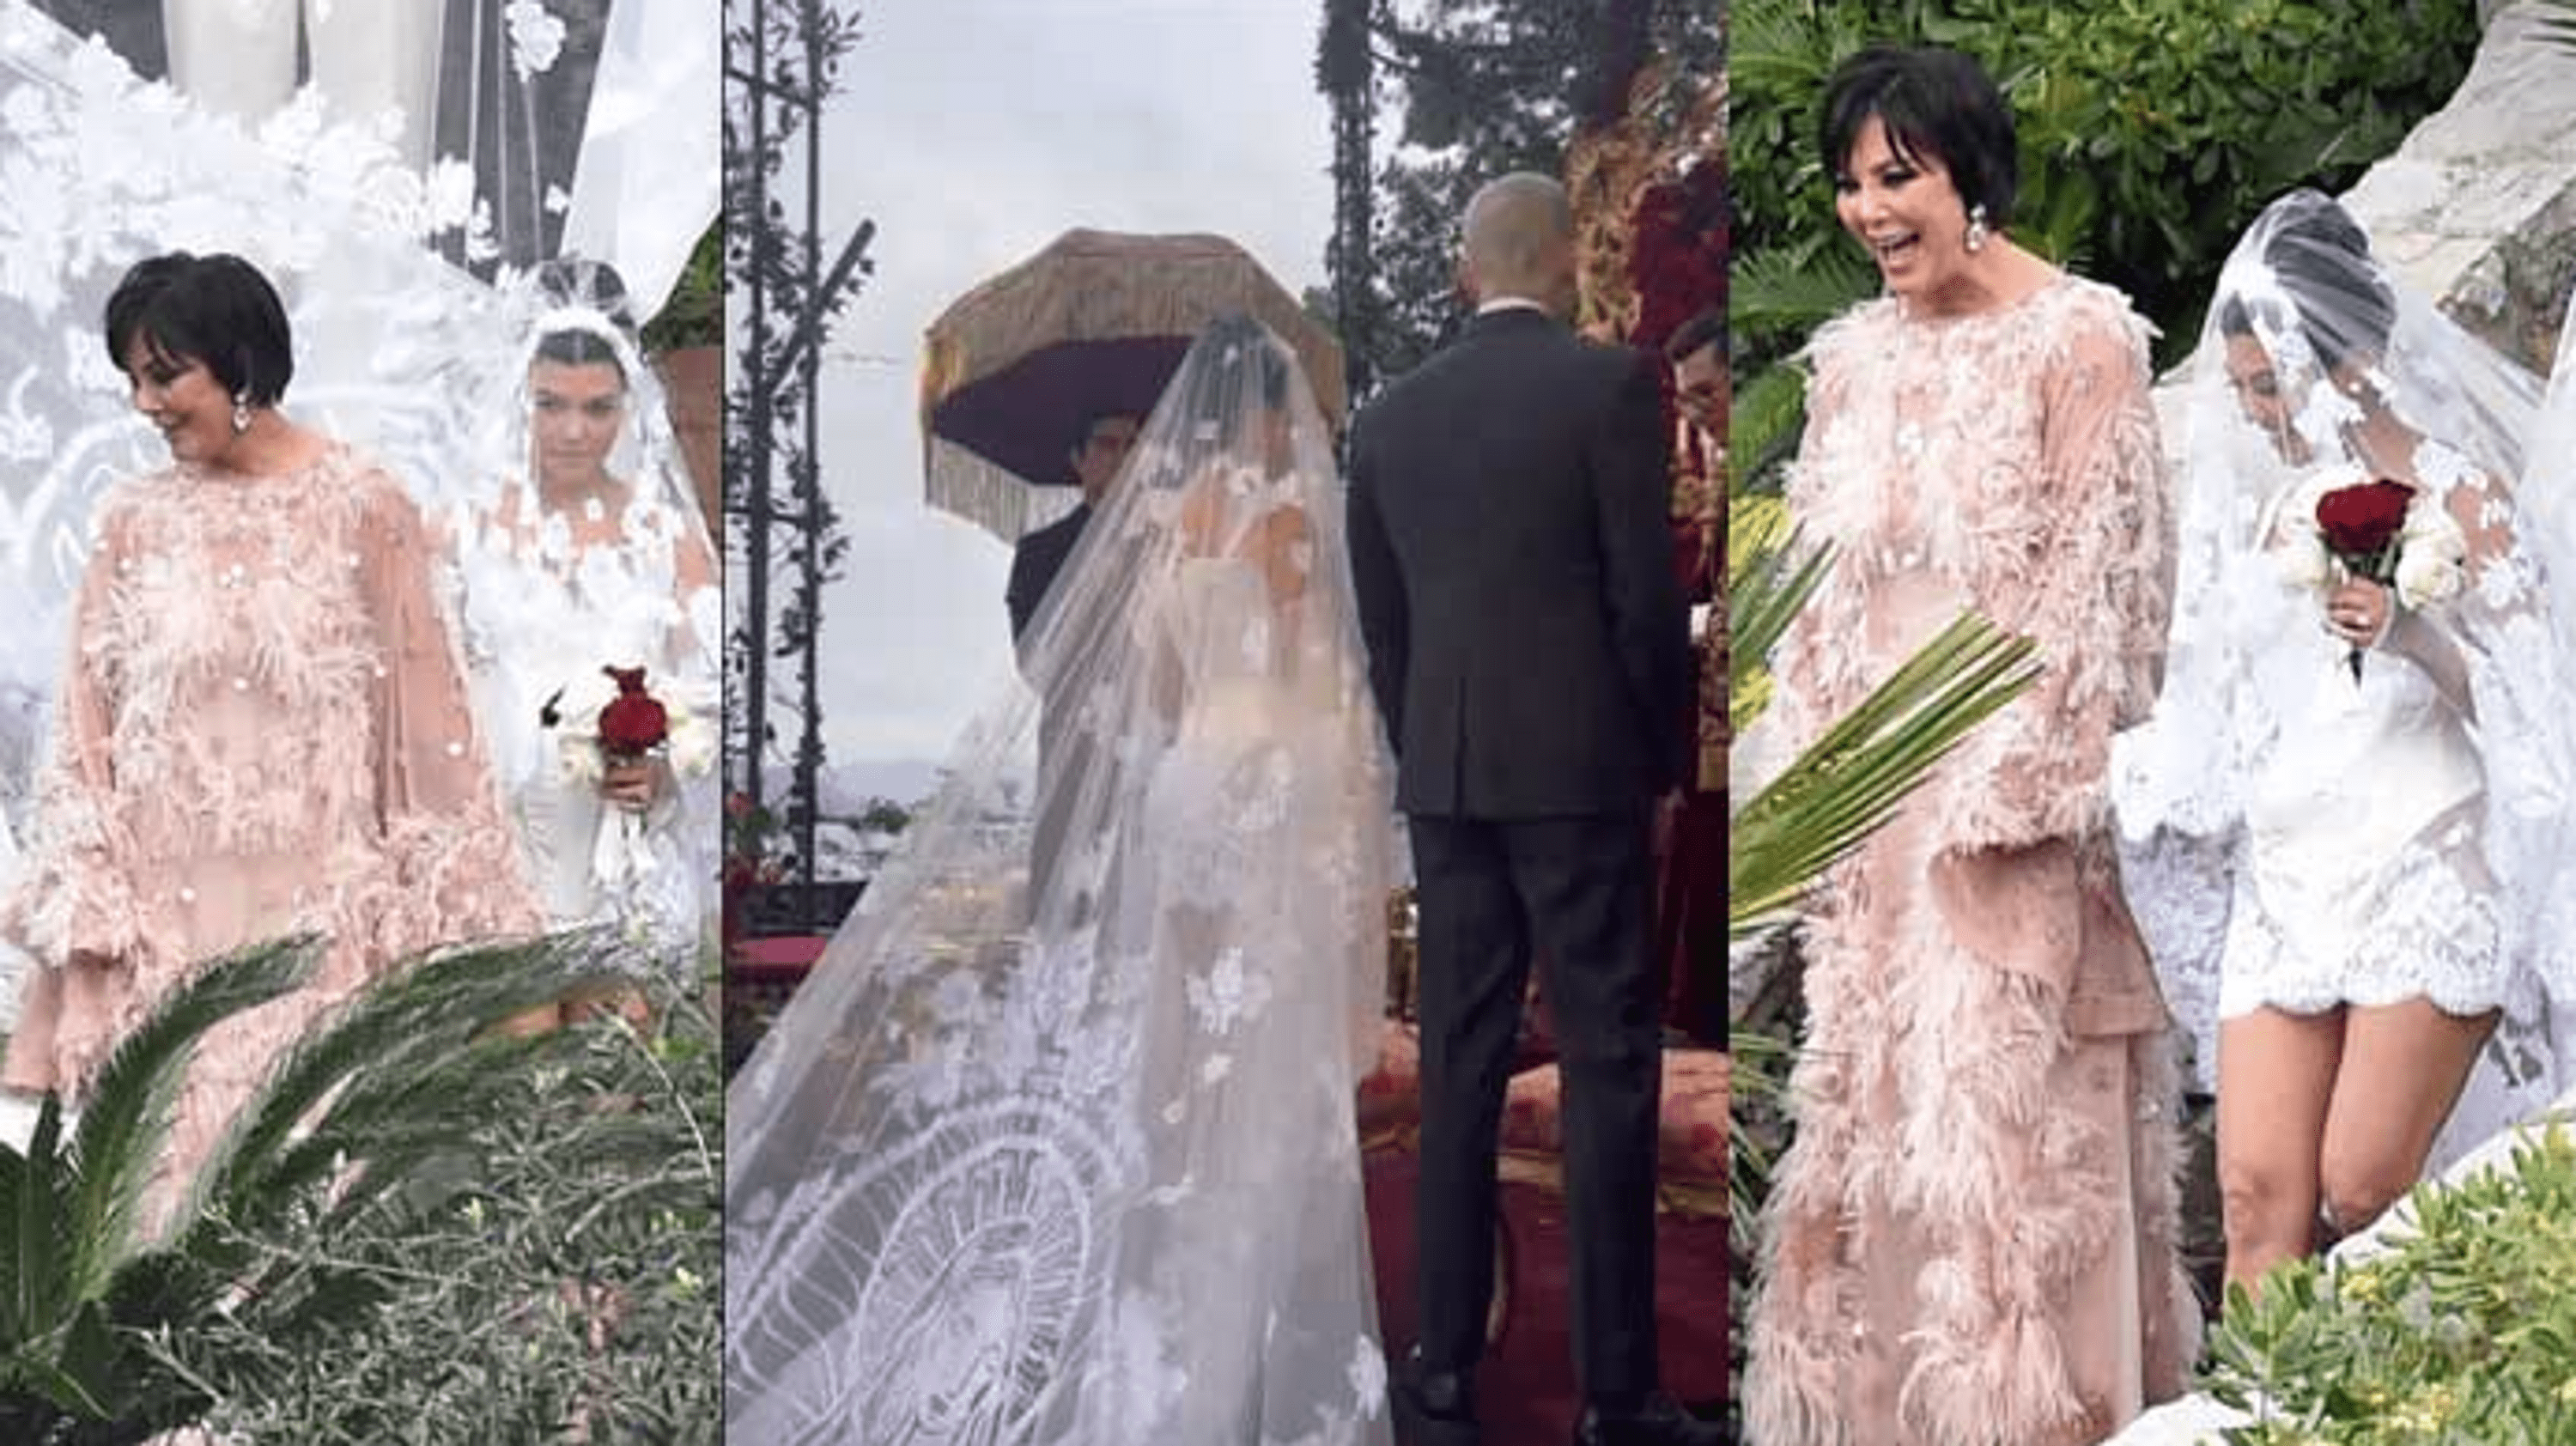 spectacular-images-of-the-kardashian-jenner-clan-at-the-italian-wedding-of-kourtney-kardashian-and-travis-barker